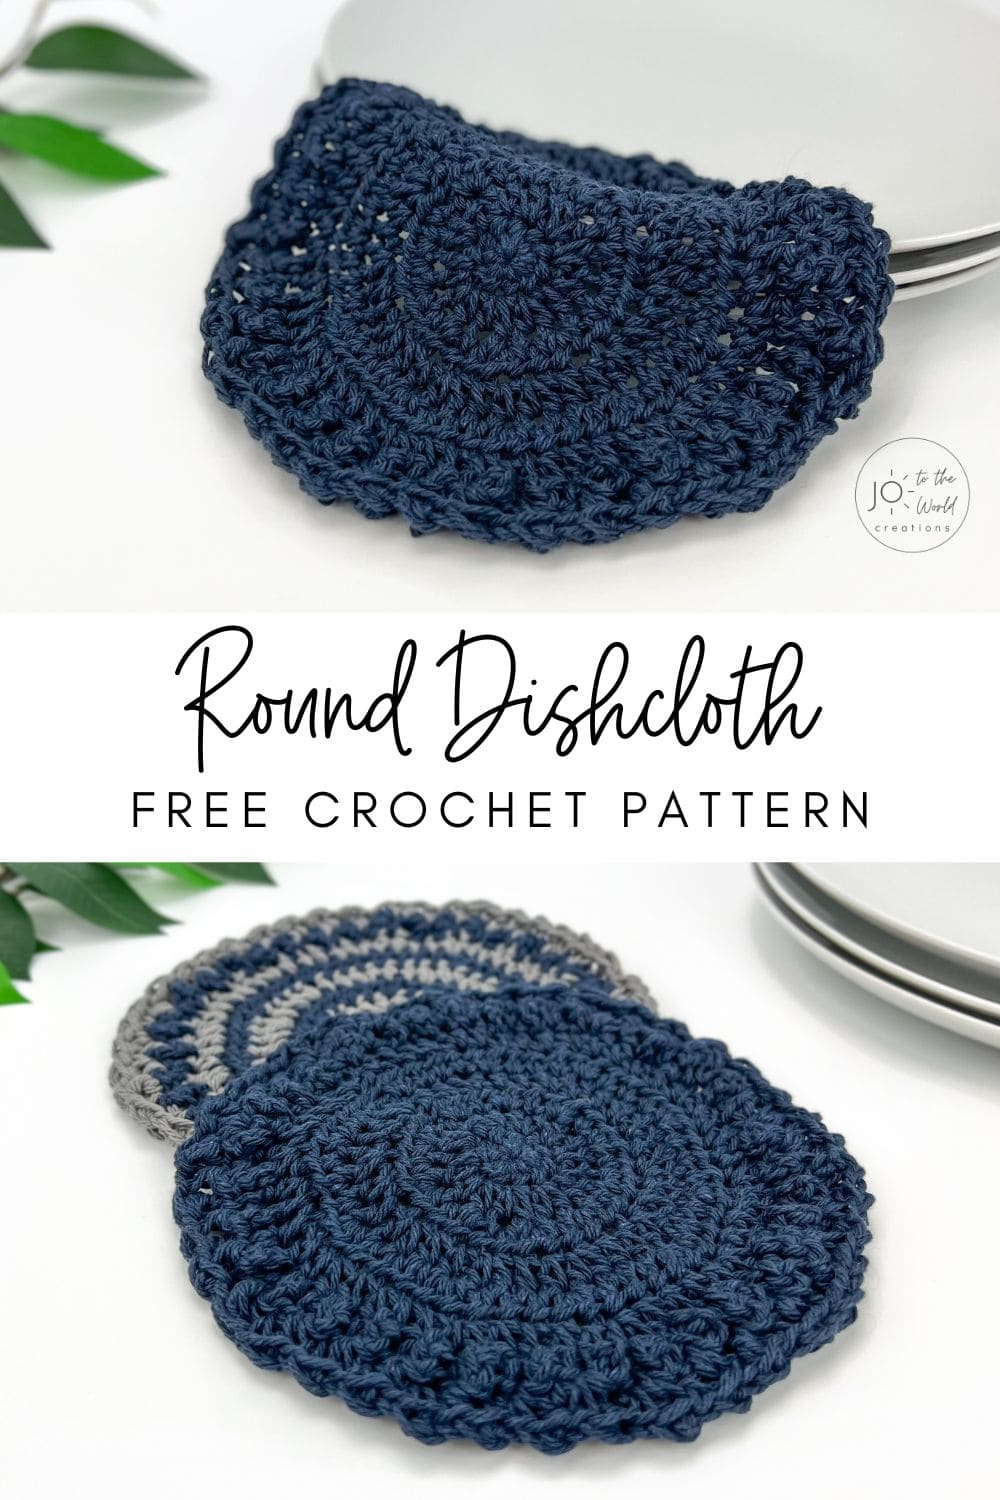 Round Crochet Dishcloth Free Pattern